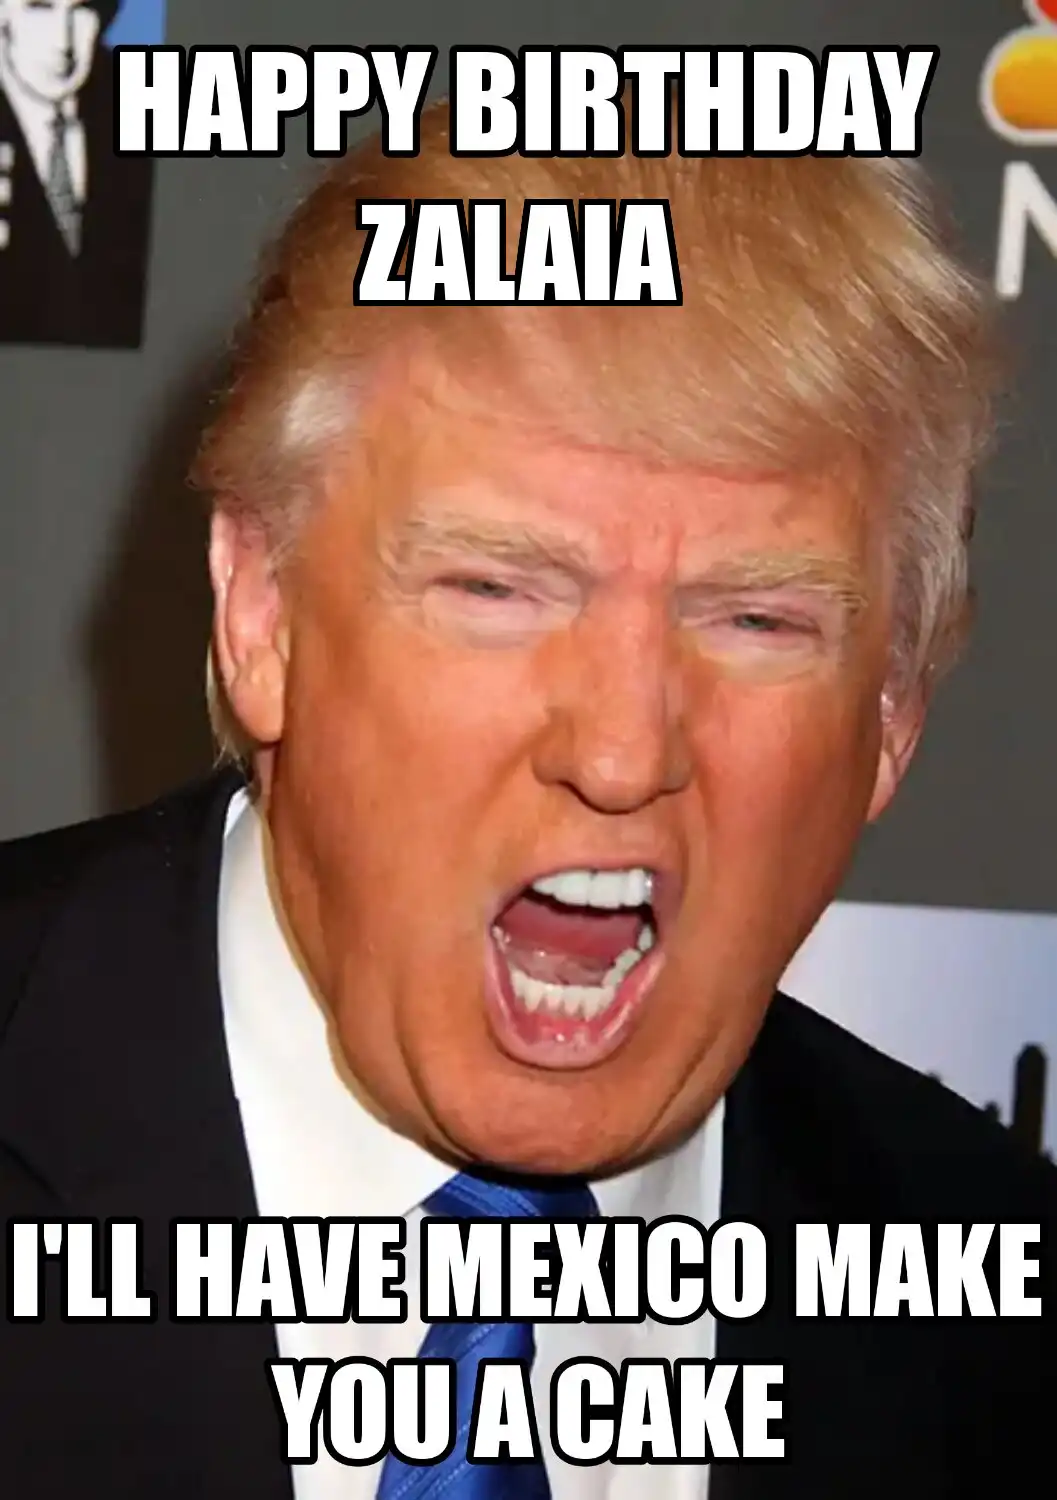 Happy Birthday Zalaia Mexico Make You A Cake Meme